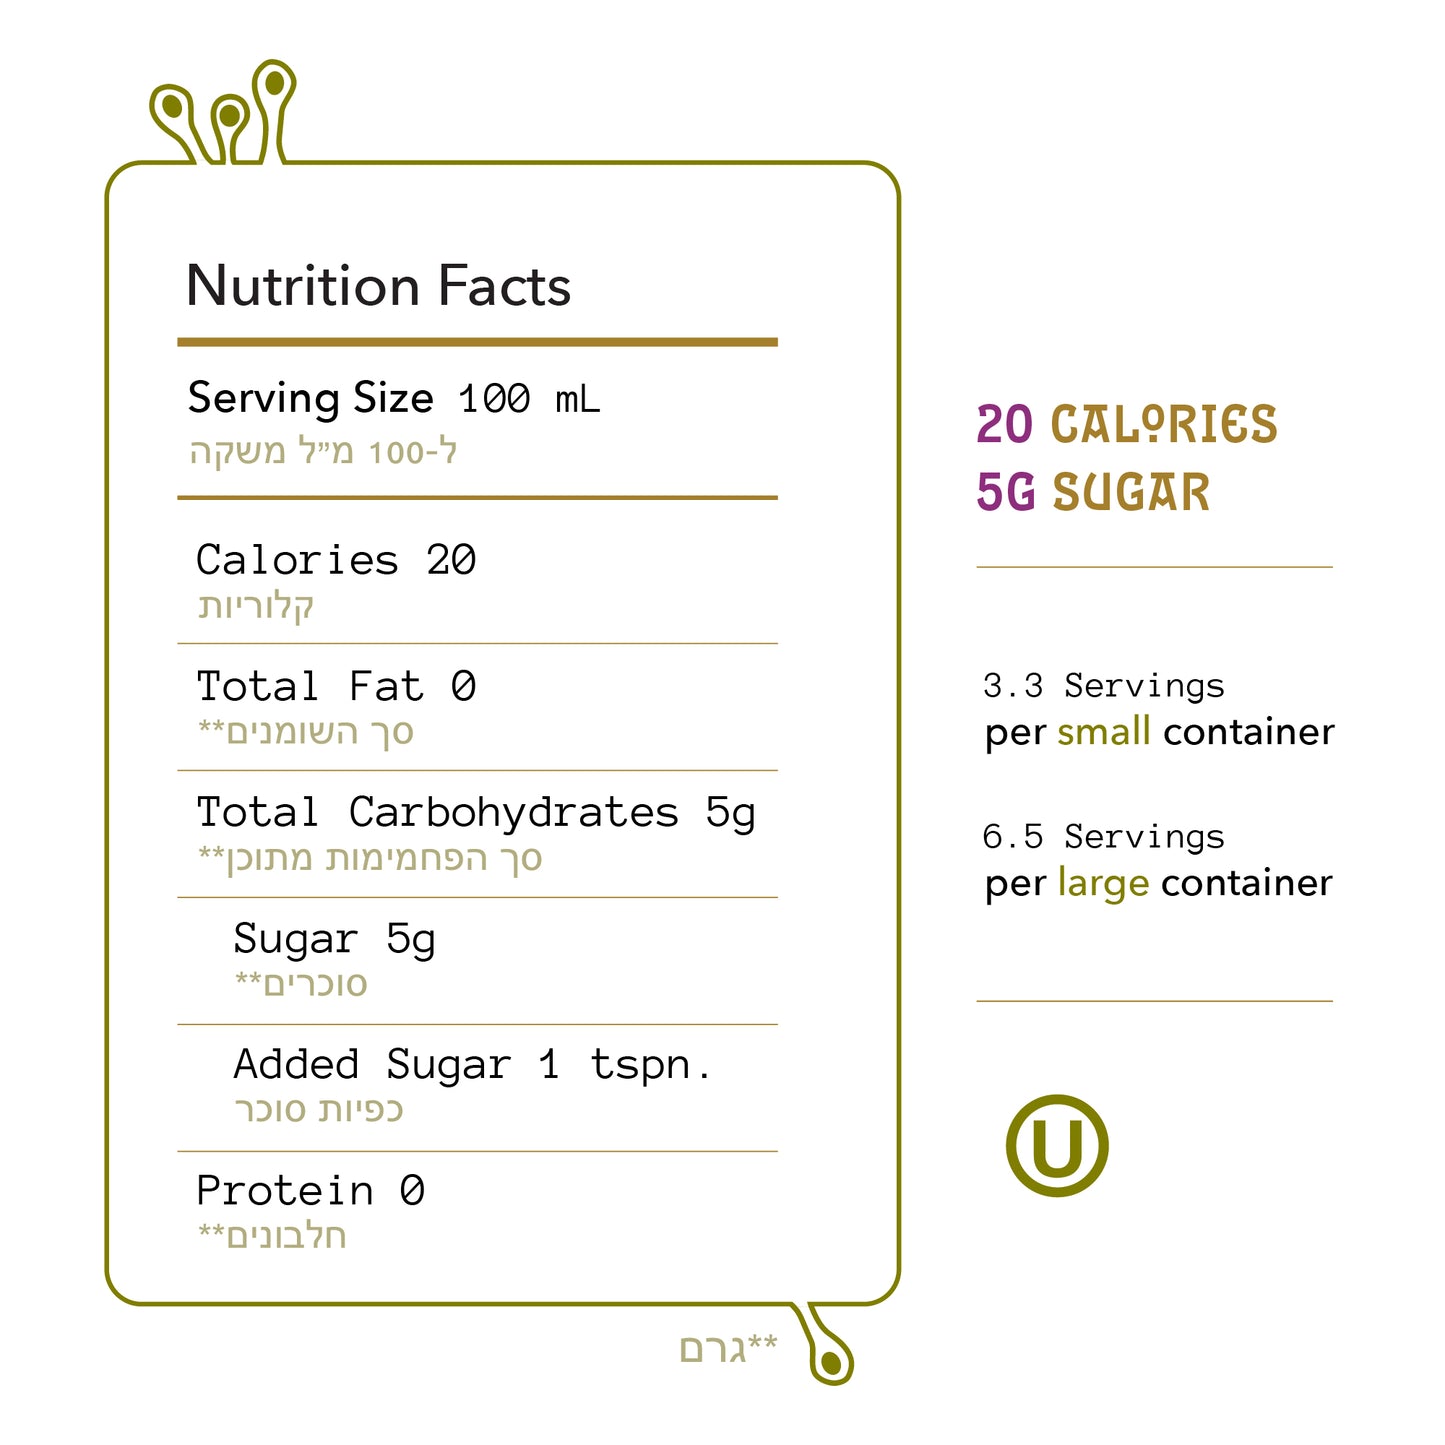 Fruit Punch Nutrition Facts 20 Calories 5g Sugar